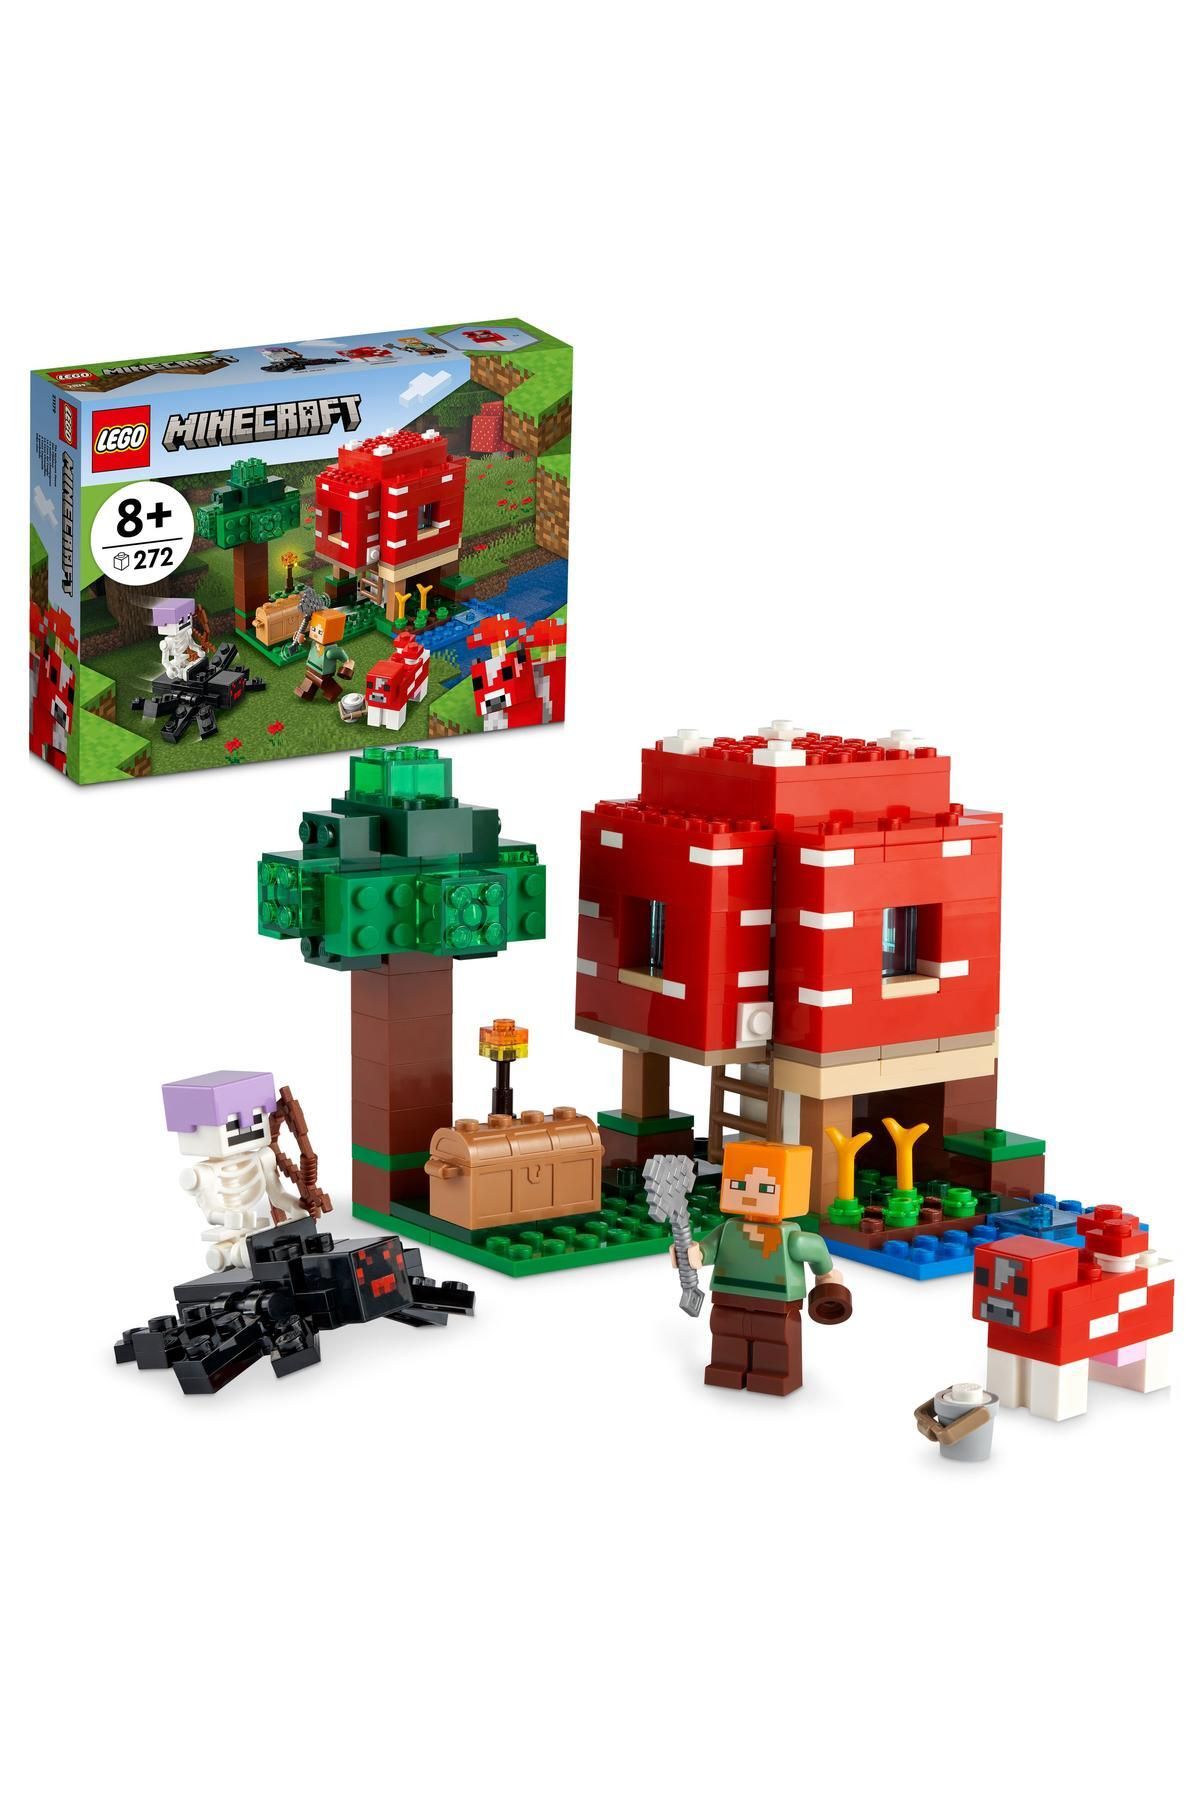 LEGO ® Minecraft® Mantar Evi 21179 Yapım Seti (272 Parça)